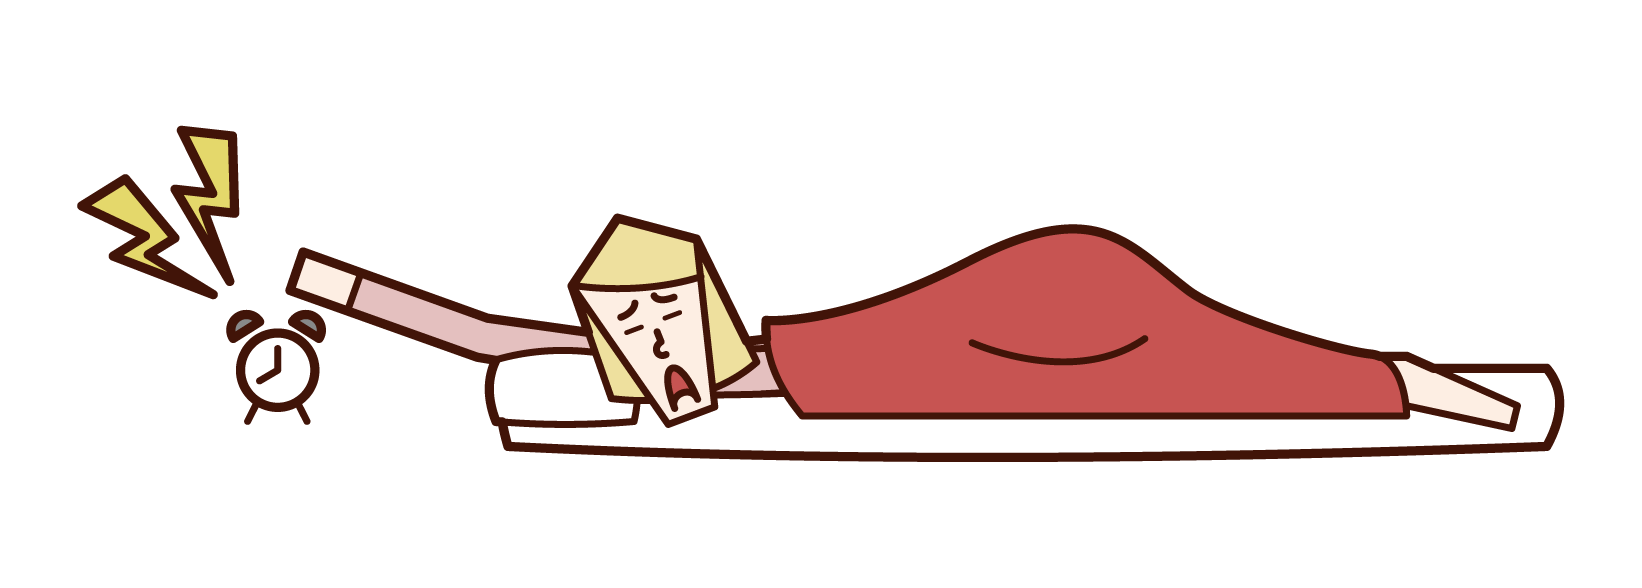 Illustration of a woman who stops alarm clock alarm